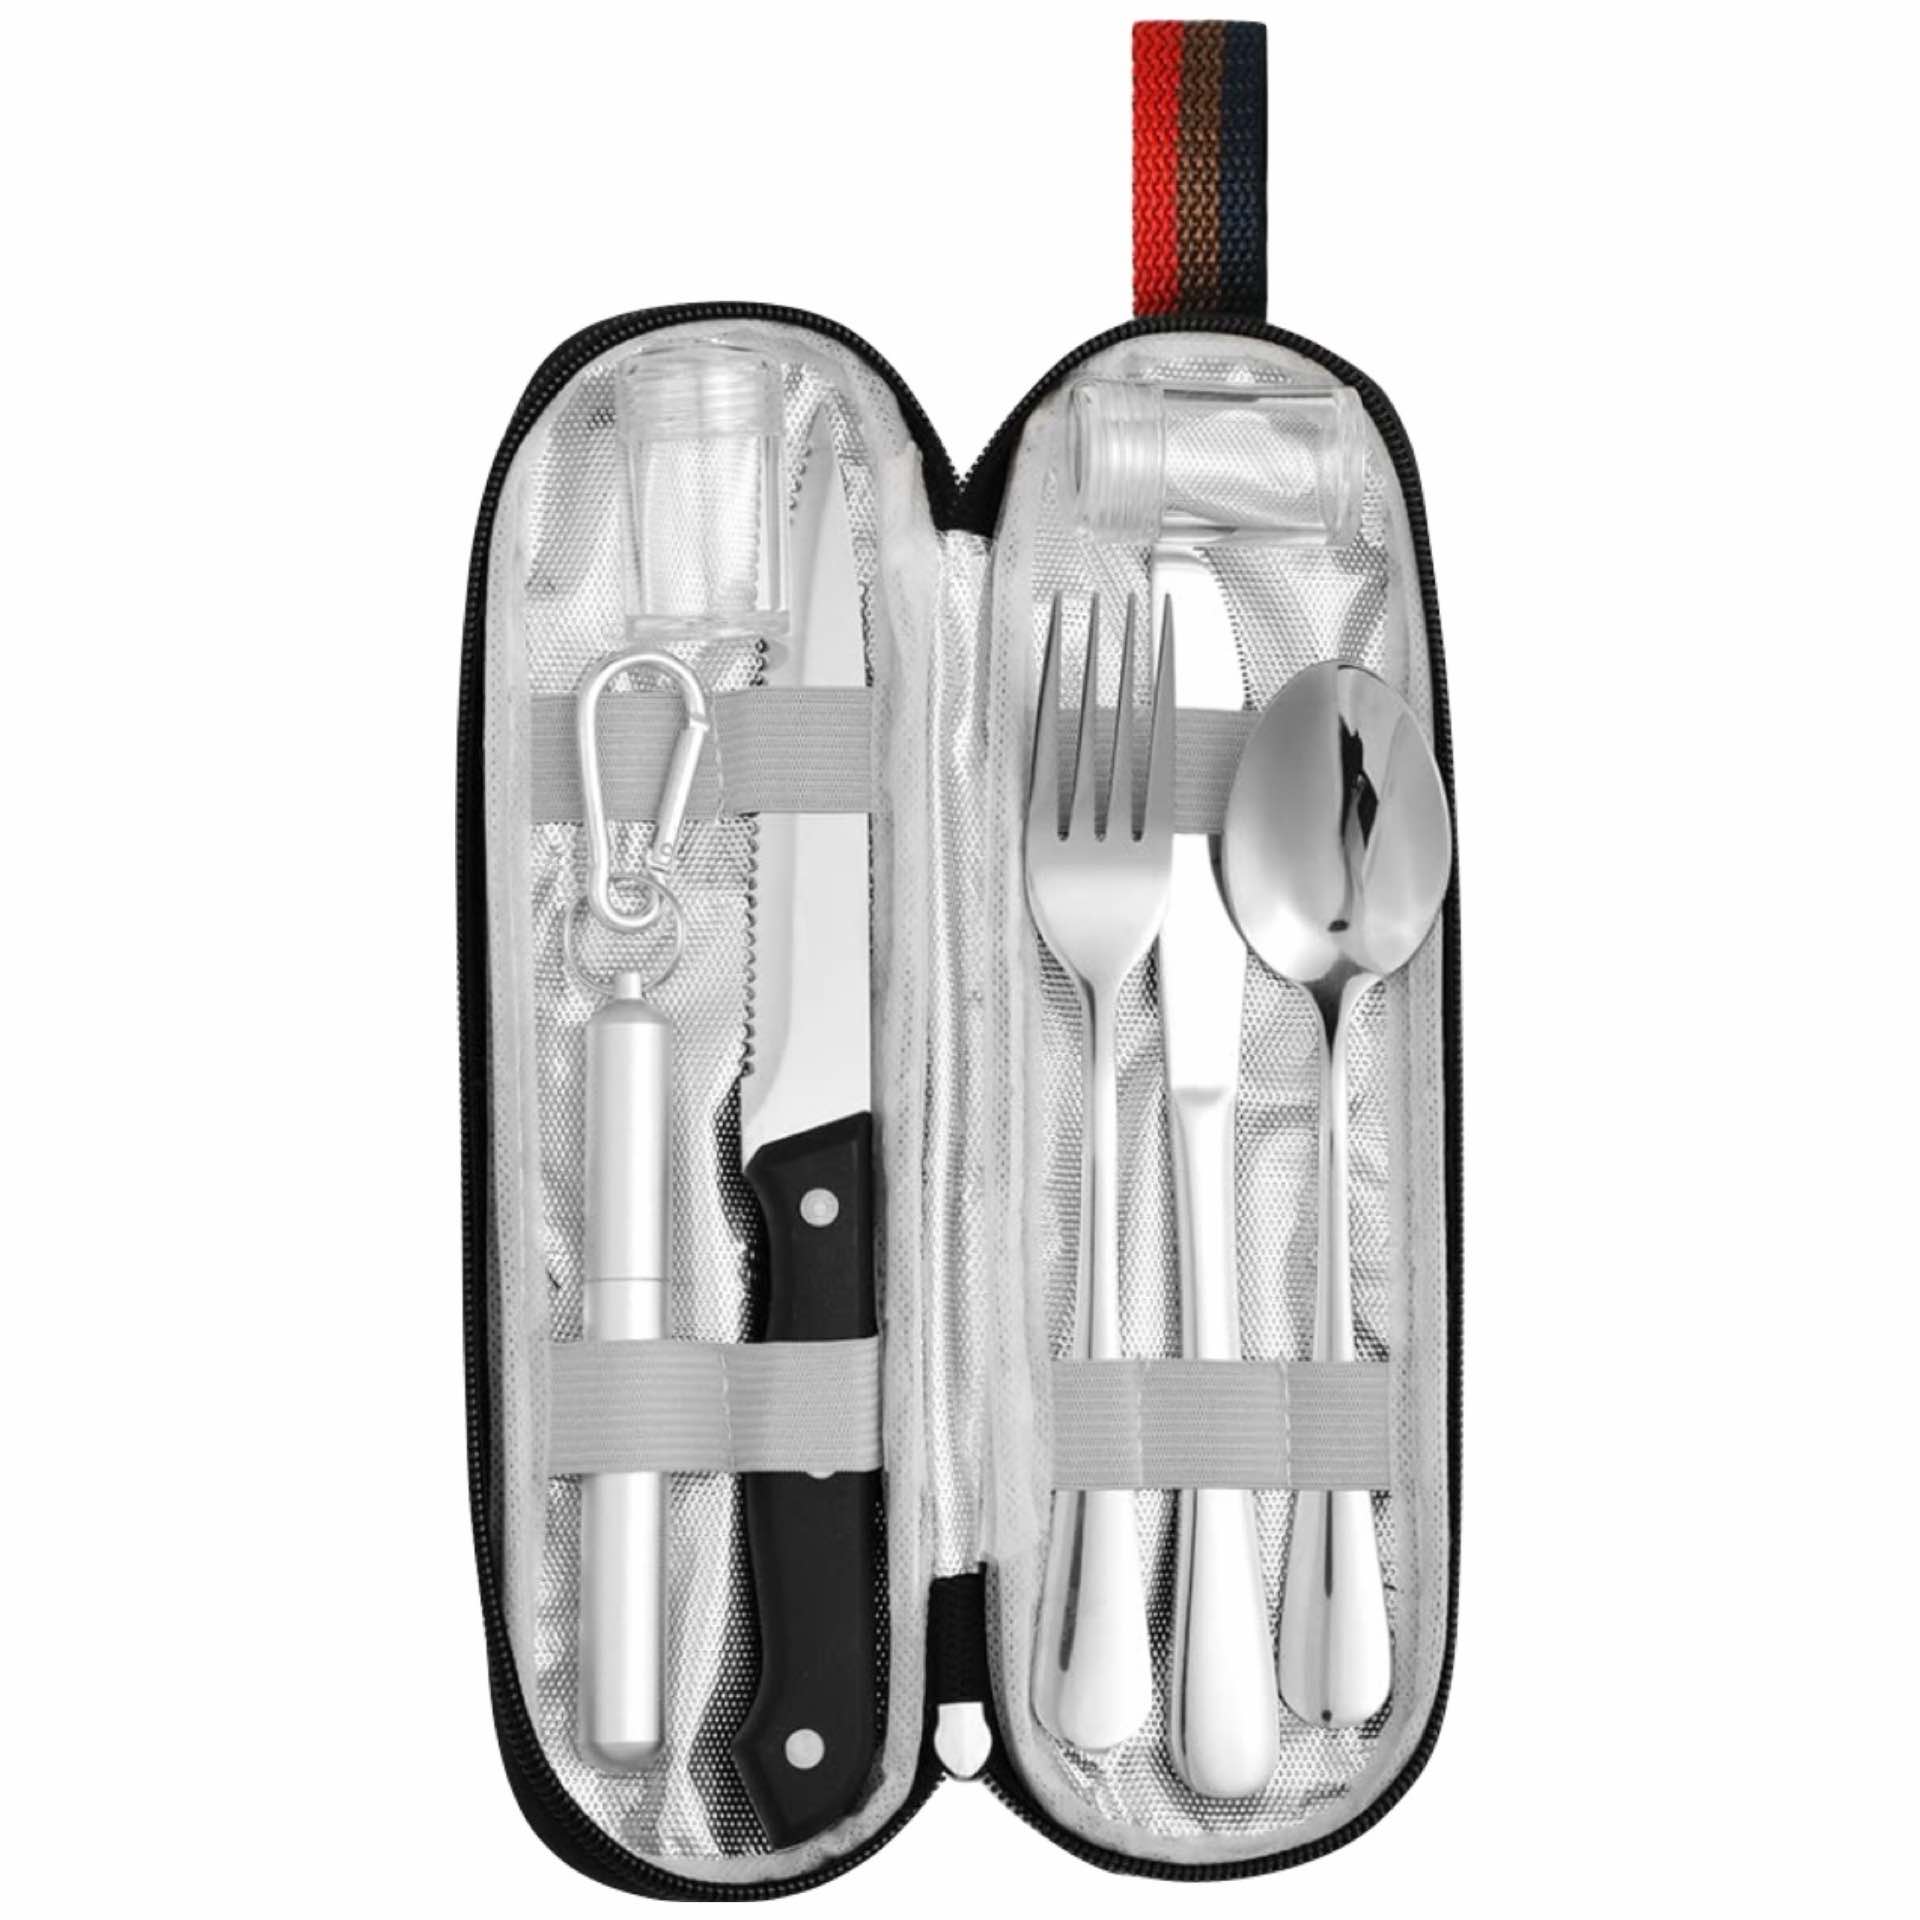 netany-travel-cutlery-set-inside-carry-case